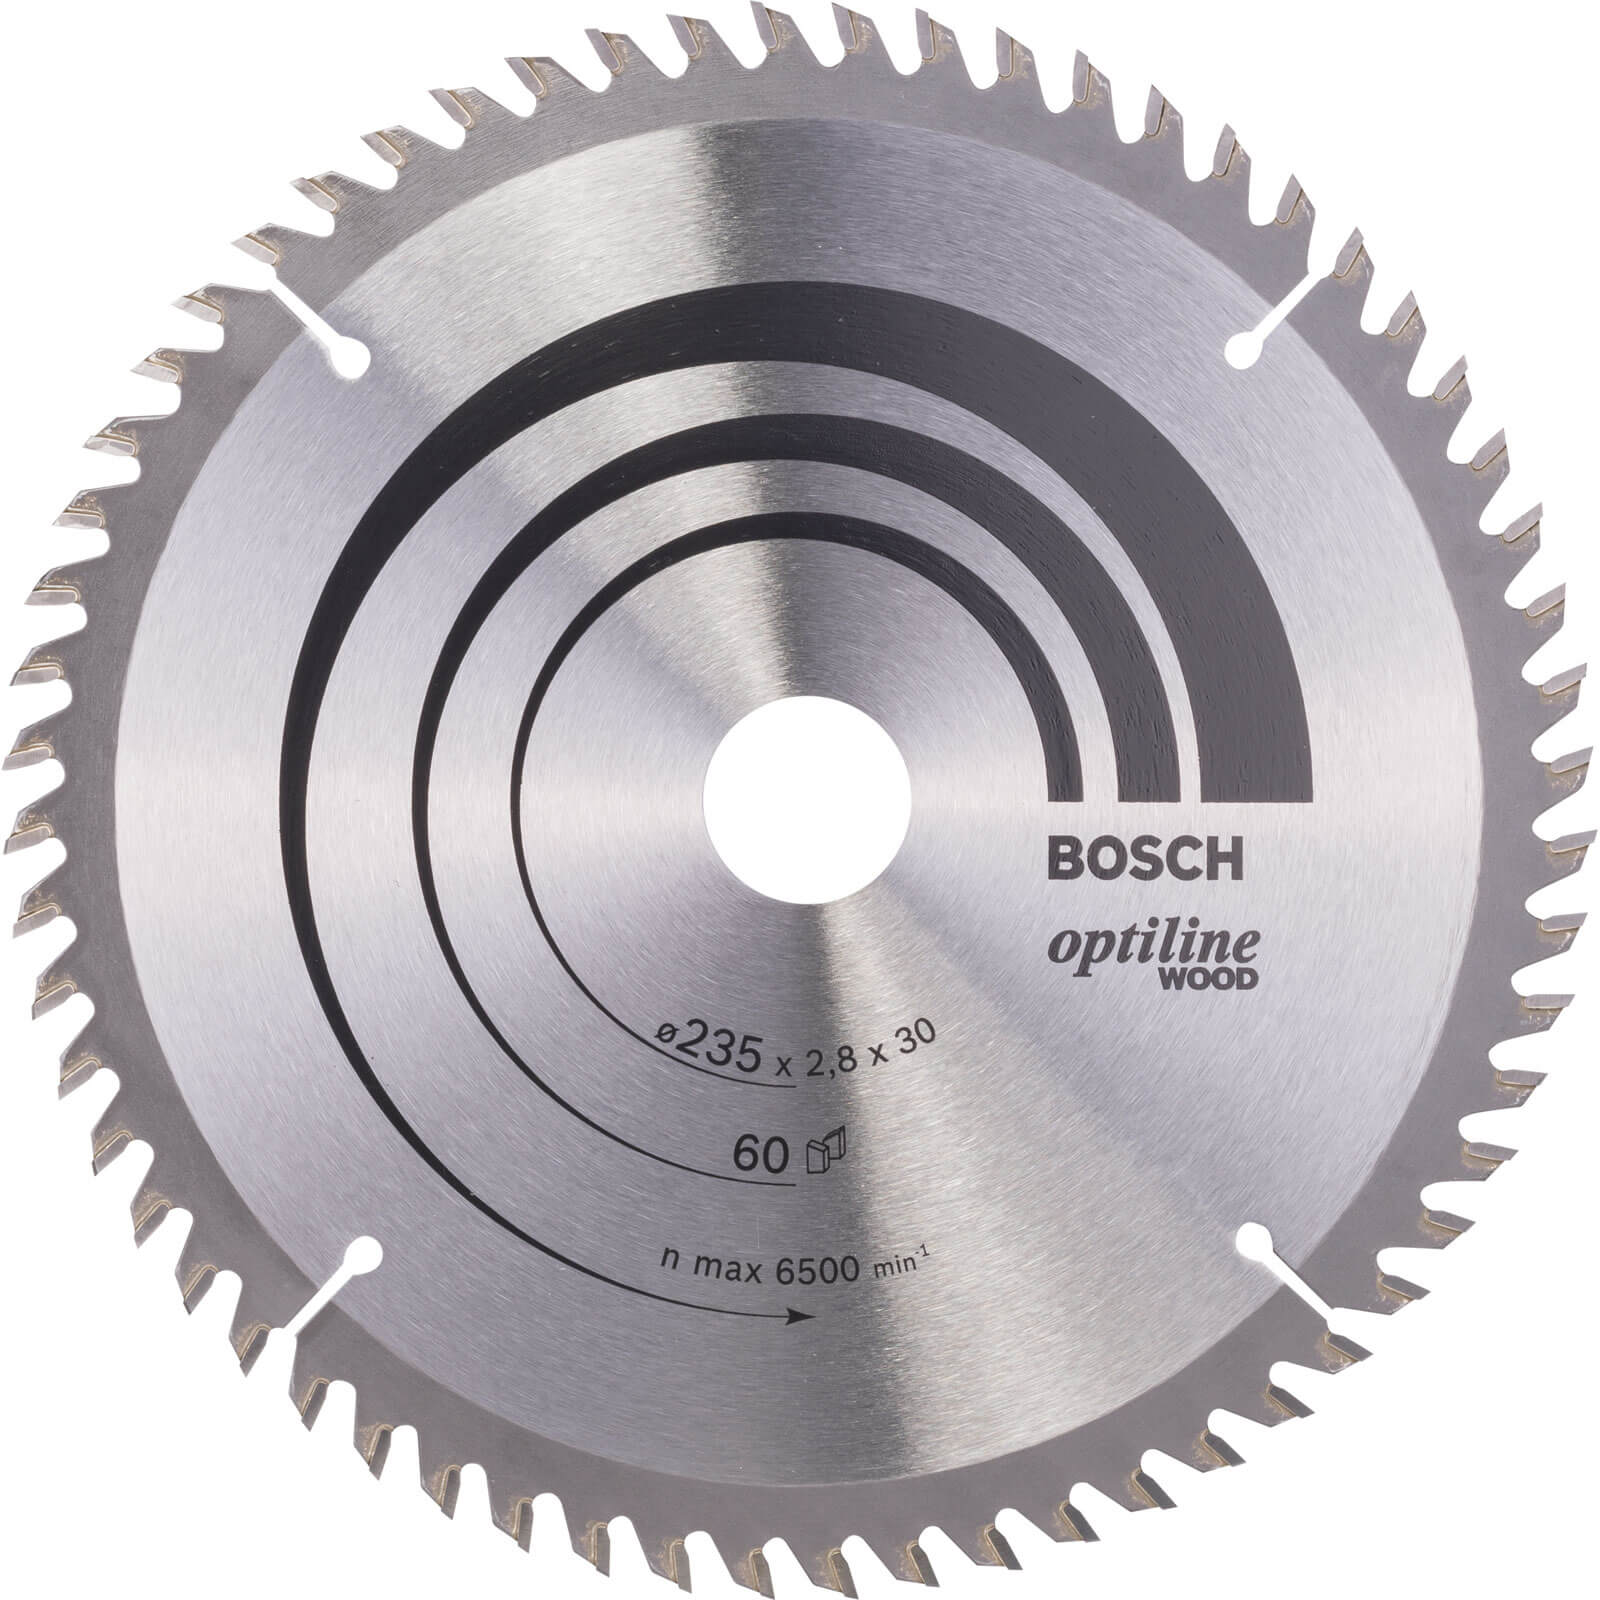 Photo of Bosch Optiline Wood Cutting Saw Blade 235mm 60t 30mm